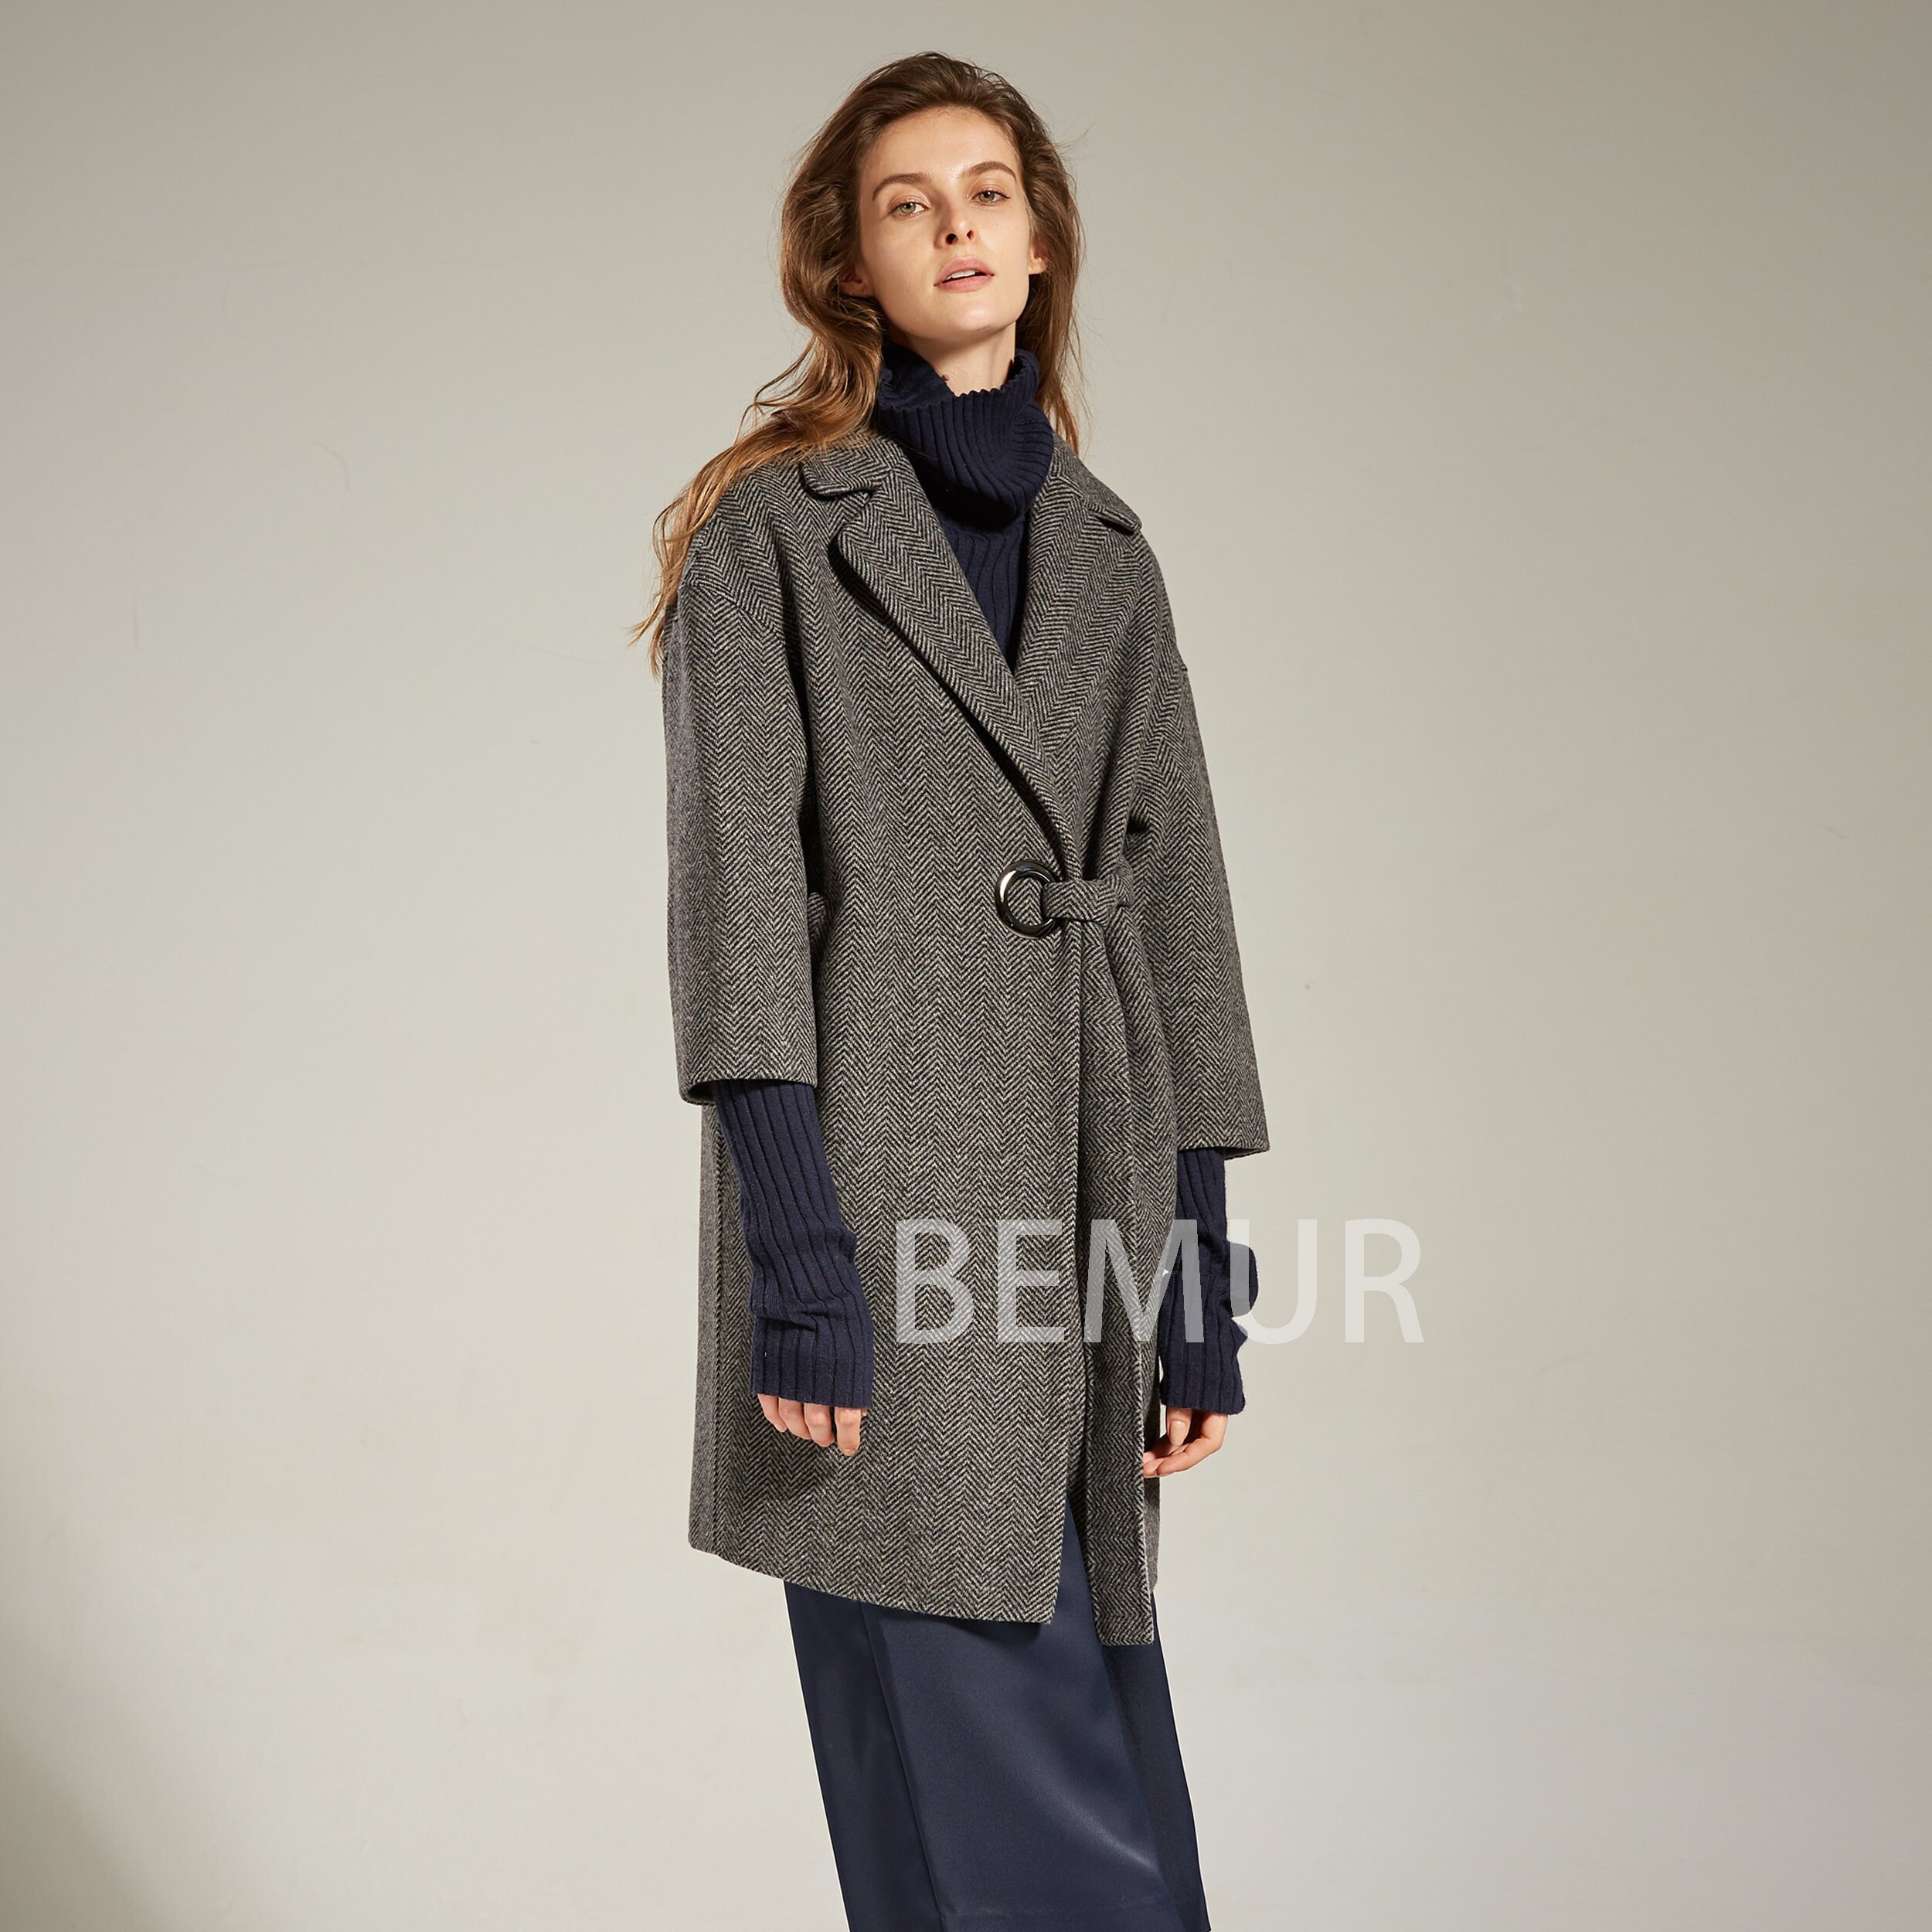 Black Plaid Winter Wrap Coat Women Plus Size Long Cardigan | Etsy